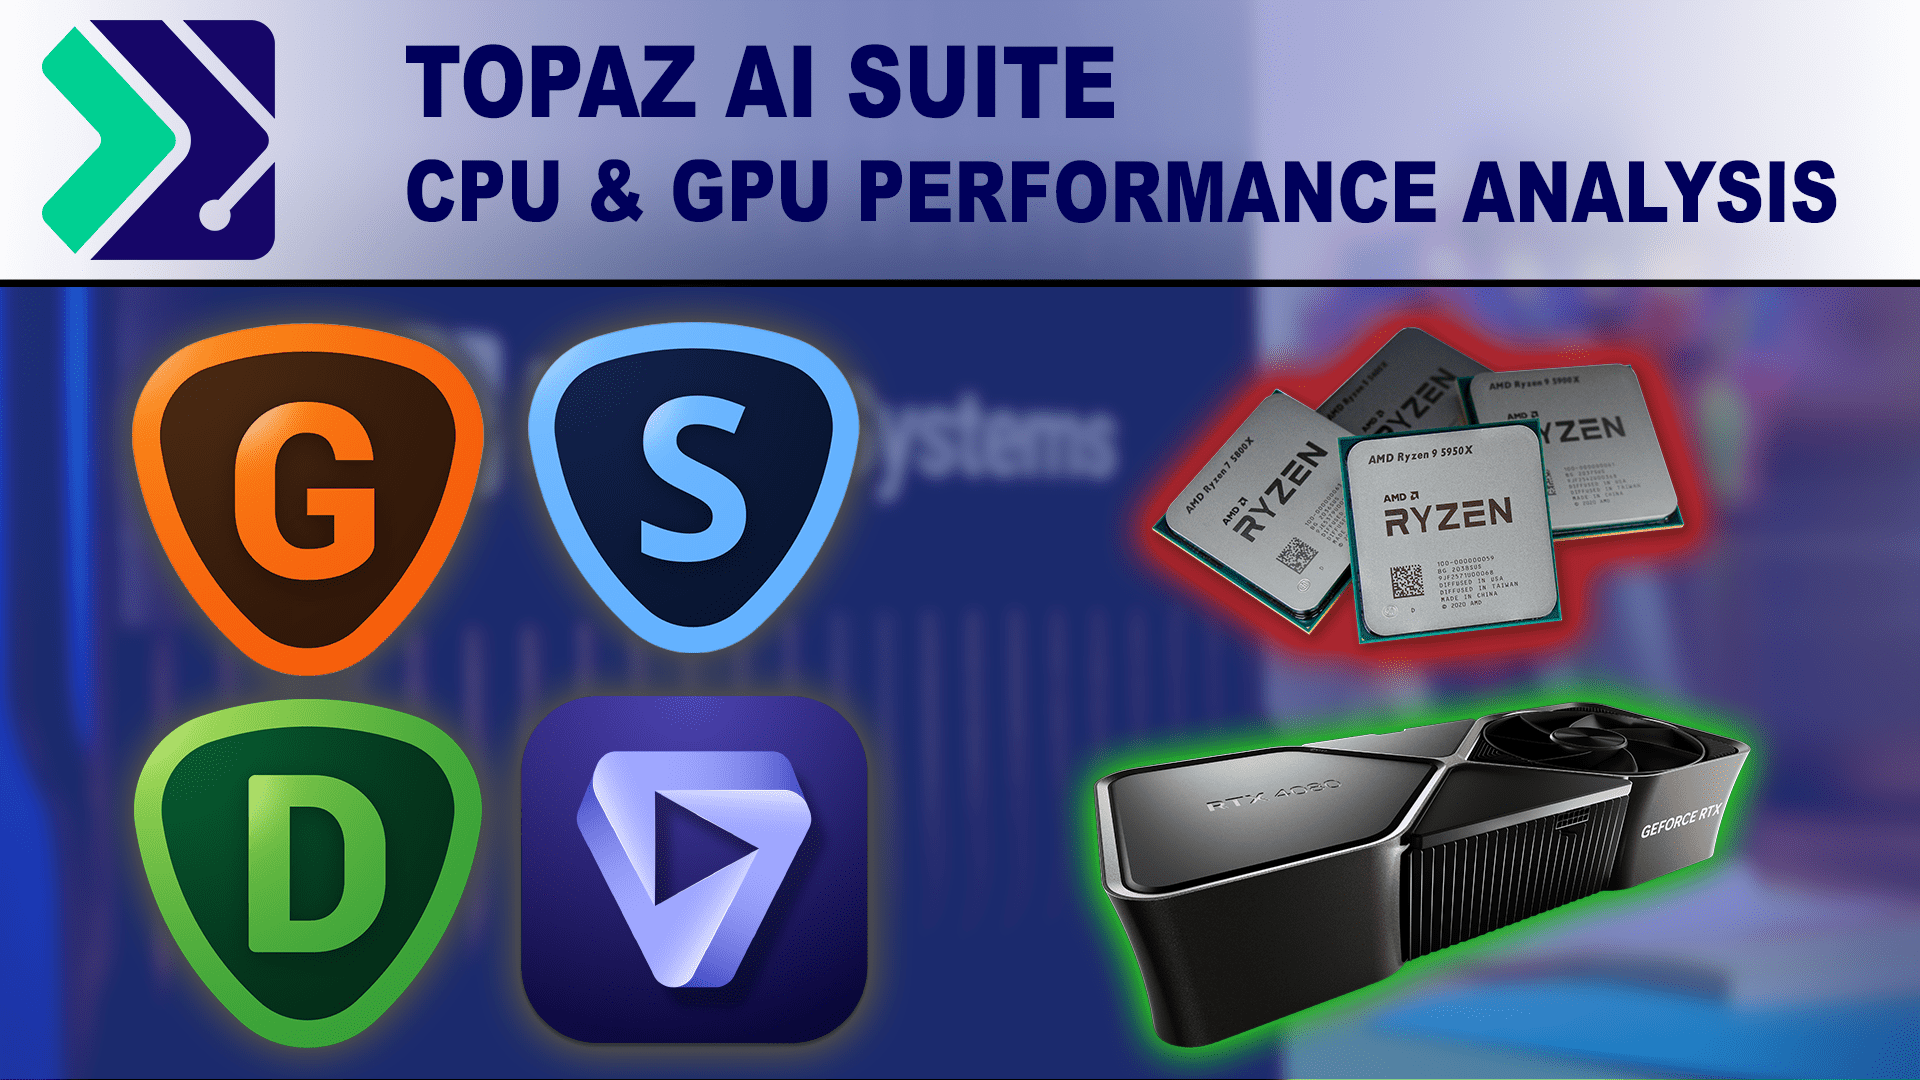 Topaz AI Suite CPU and GPU Benchmark Performance Testing Analysis